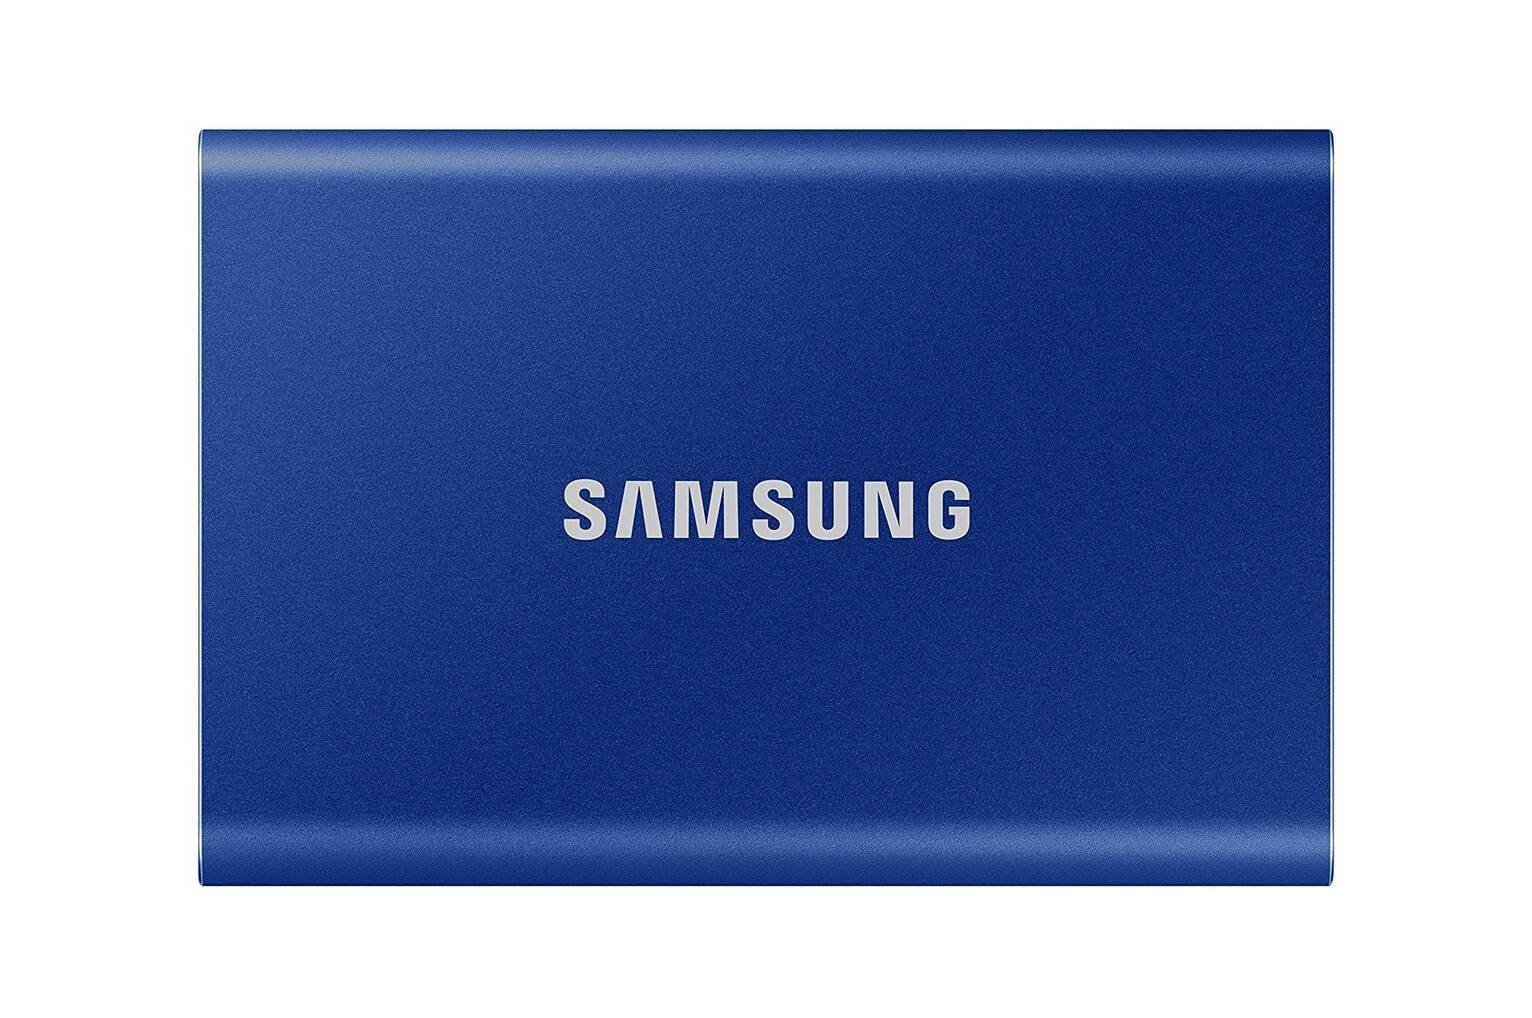 Samsung T7 USB 3.2 Gen 2 2TB Portable SSD Hard Drive Review